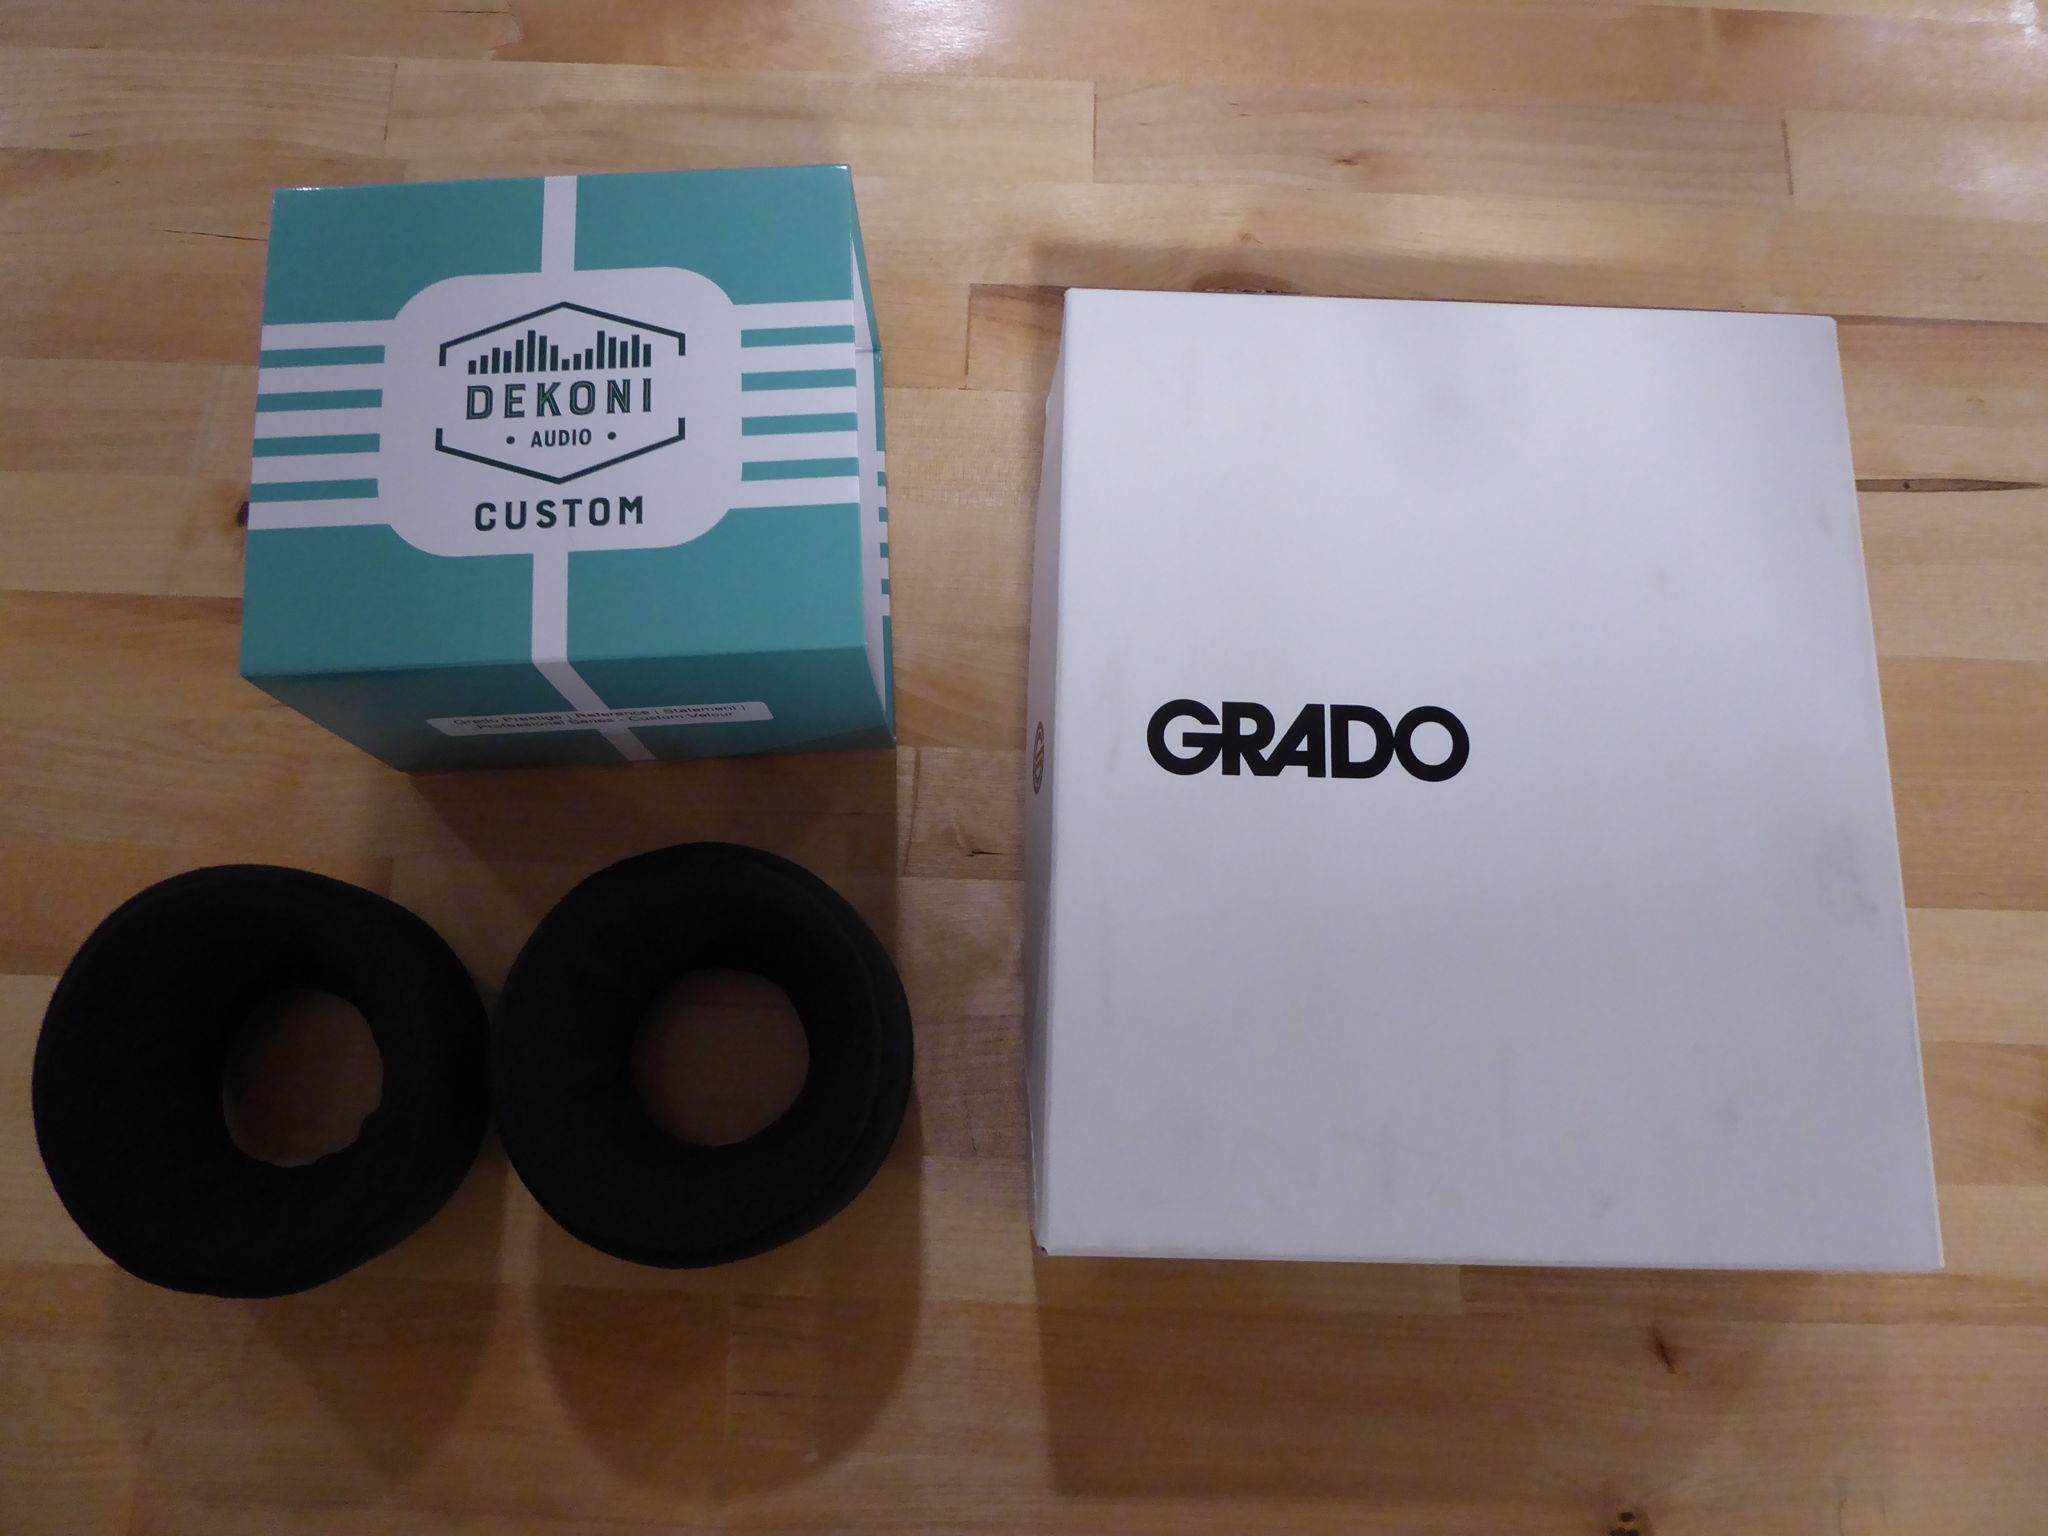 Grado Hemp Limited Edition w/ Extra Dekoni Custom Pads ... 6